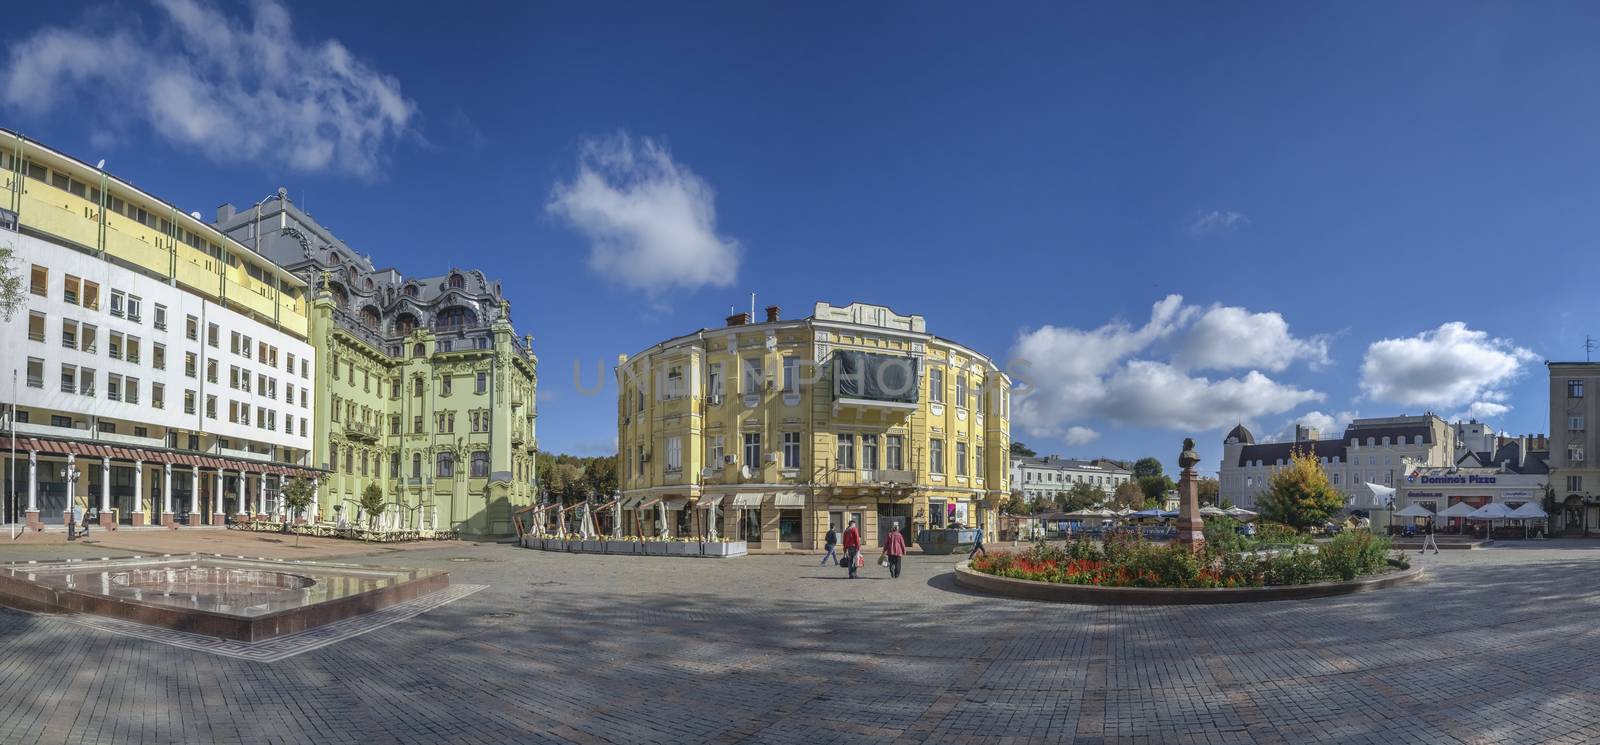 Greek Square in Odessa, Ukraine by Multipedia